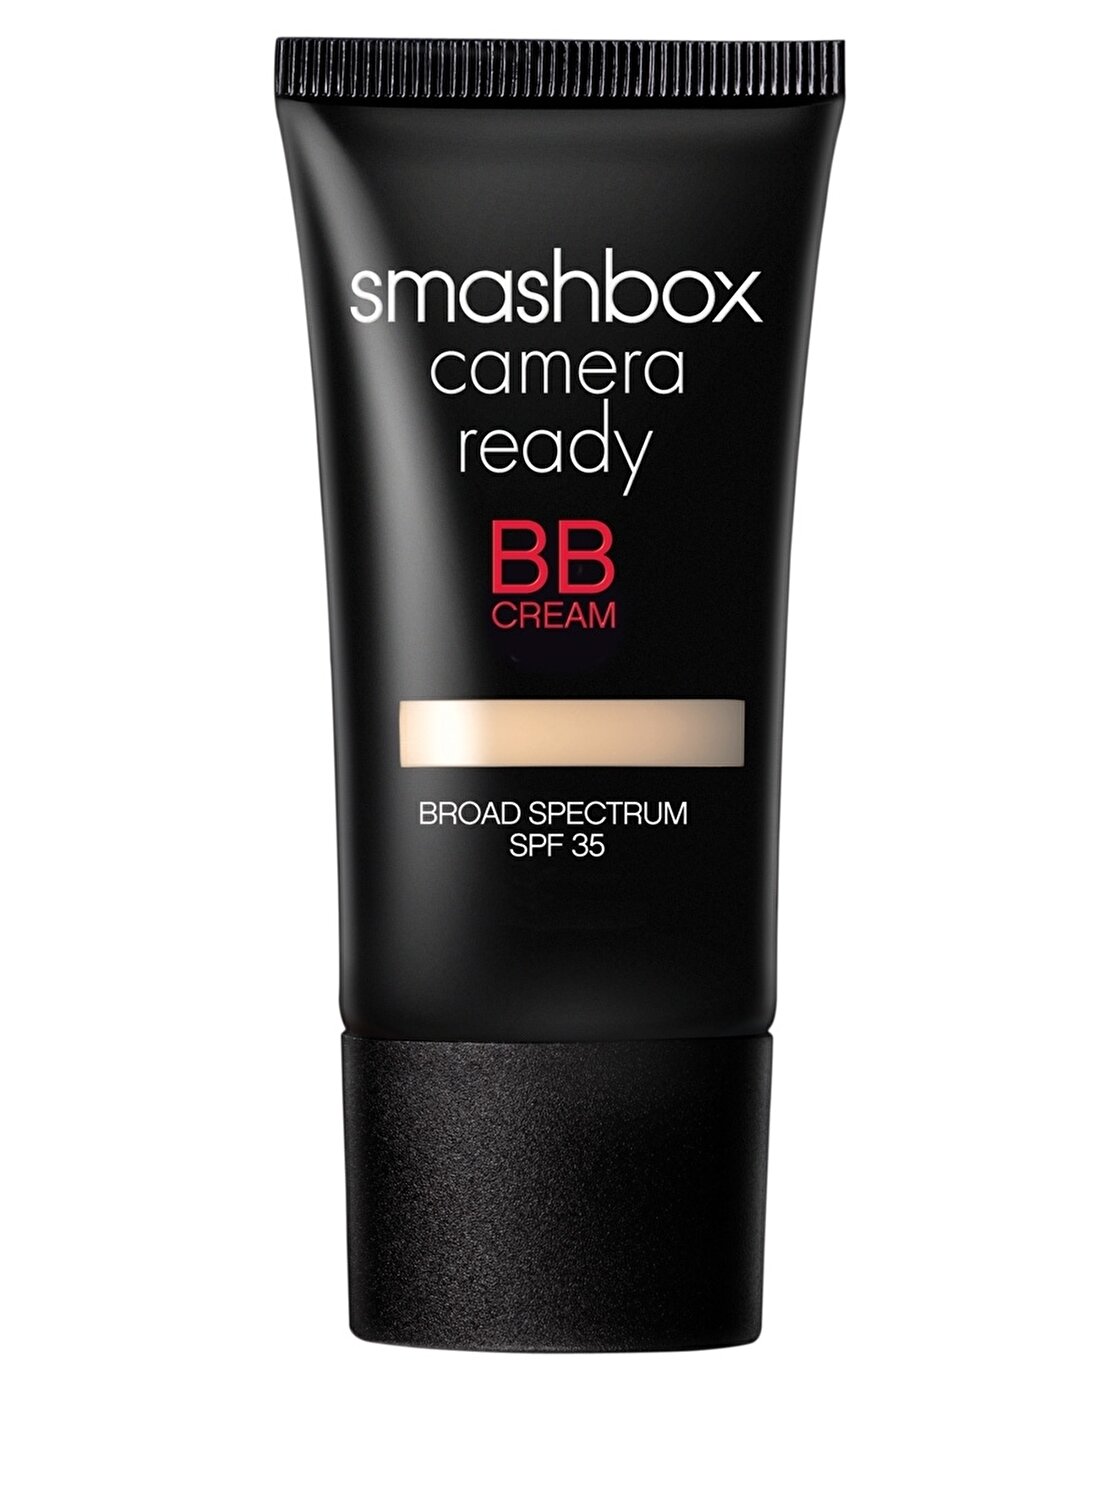 Smashbox Camera Ready BB Cream SPF 35 -Fair